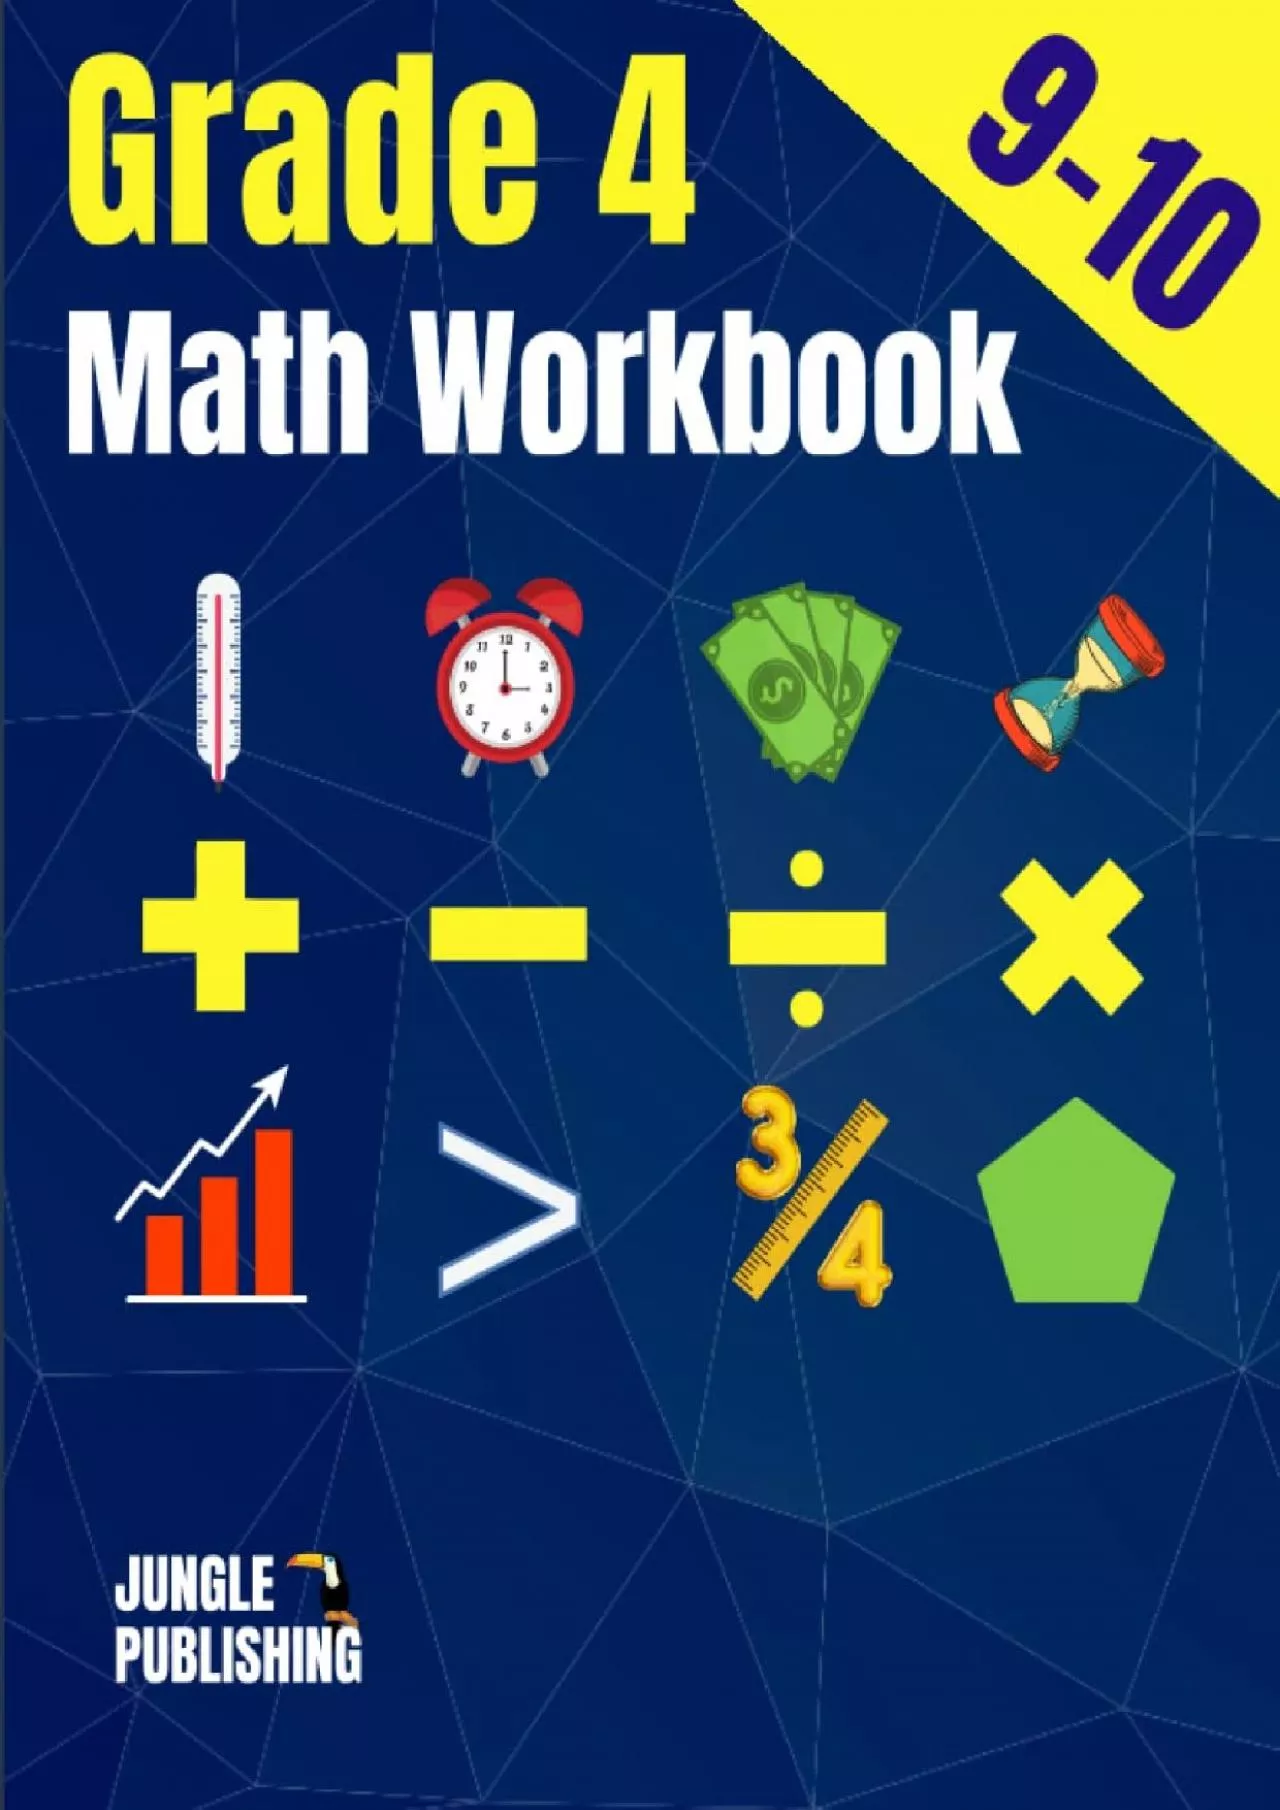 [EBOOK] Grade 4 Math Workbook: Practice Math Drills - Exercise Book for Math Fluency |